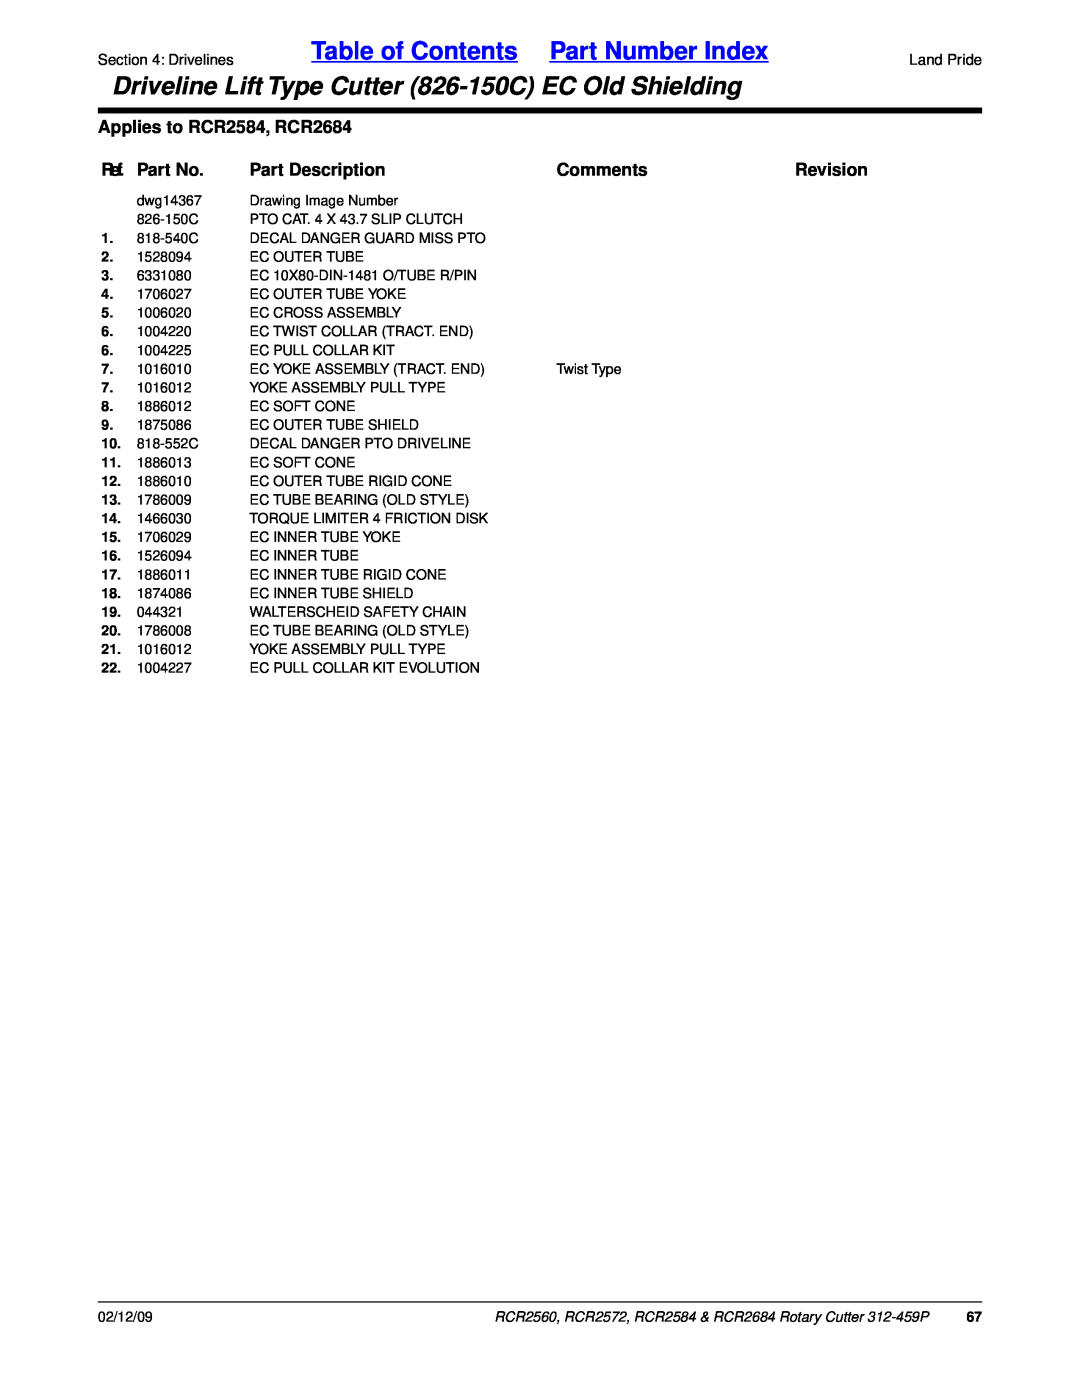 Land Pride RCR2560 manual Table of Contents Part Number Index, Applies to RCR2584, RCR2684, Ref. Part No, Part Description 